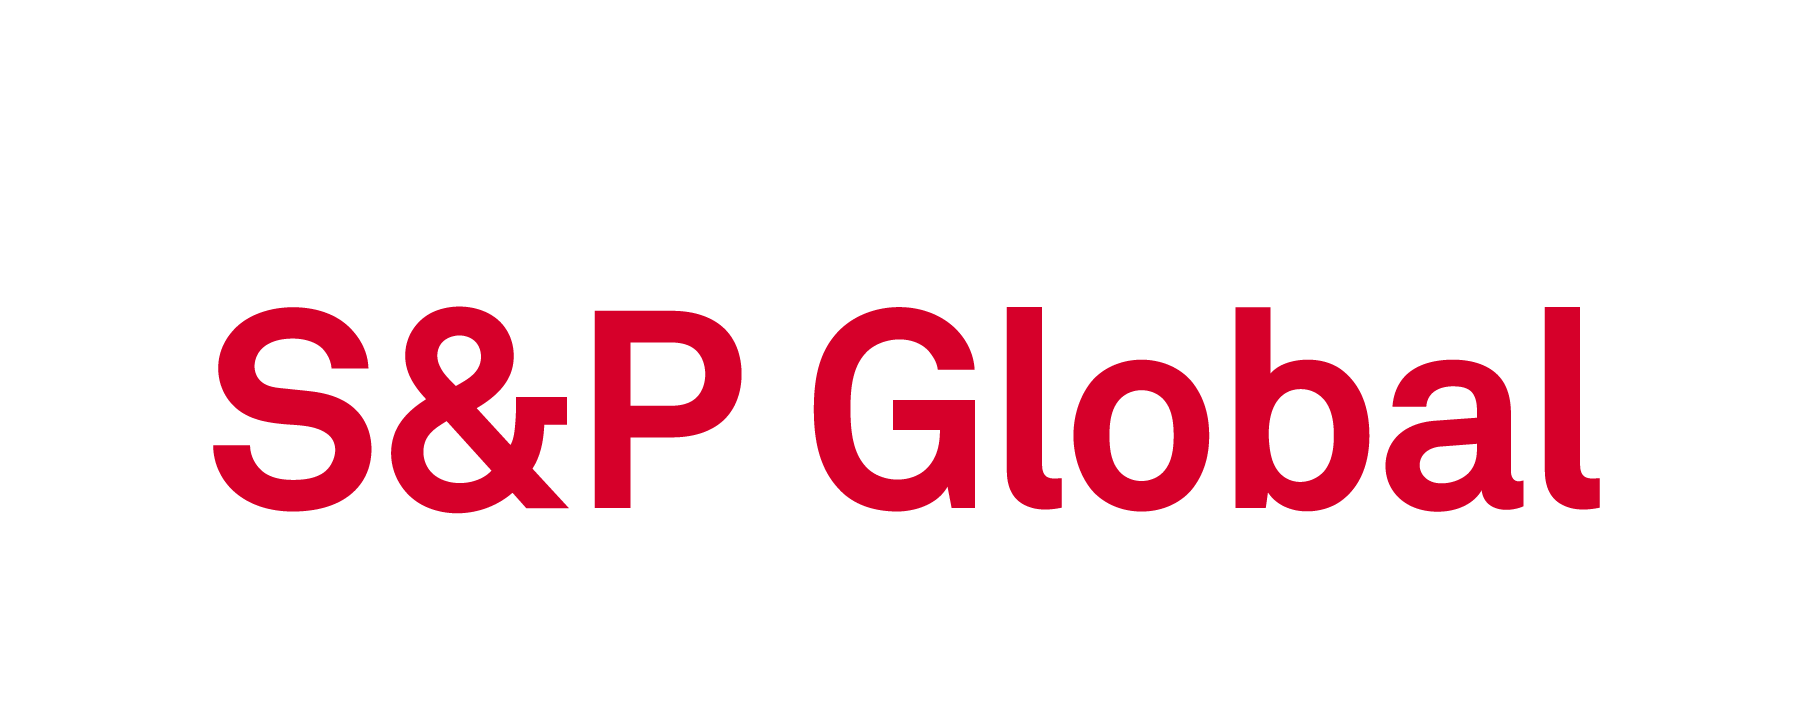 S&P Global. S&P лого. S&P Global Platts. S P Global Platts лого. Организация s p